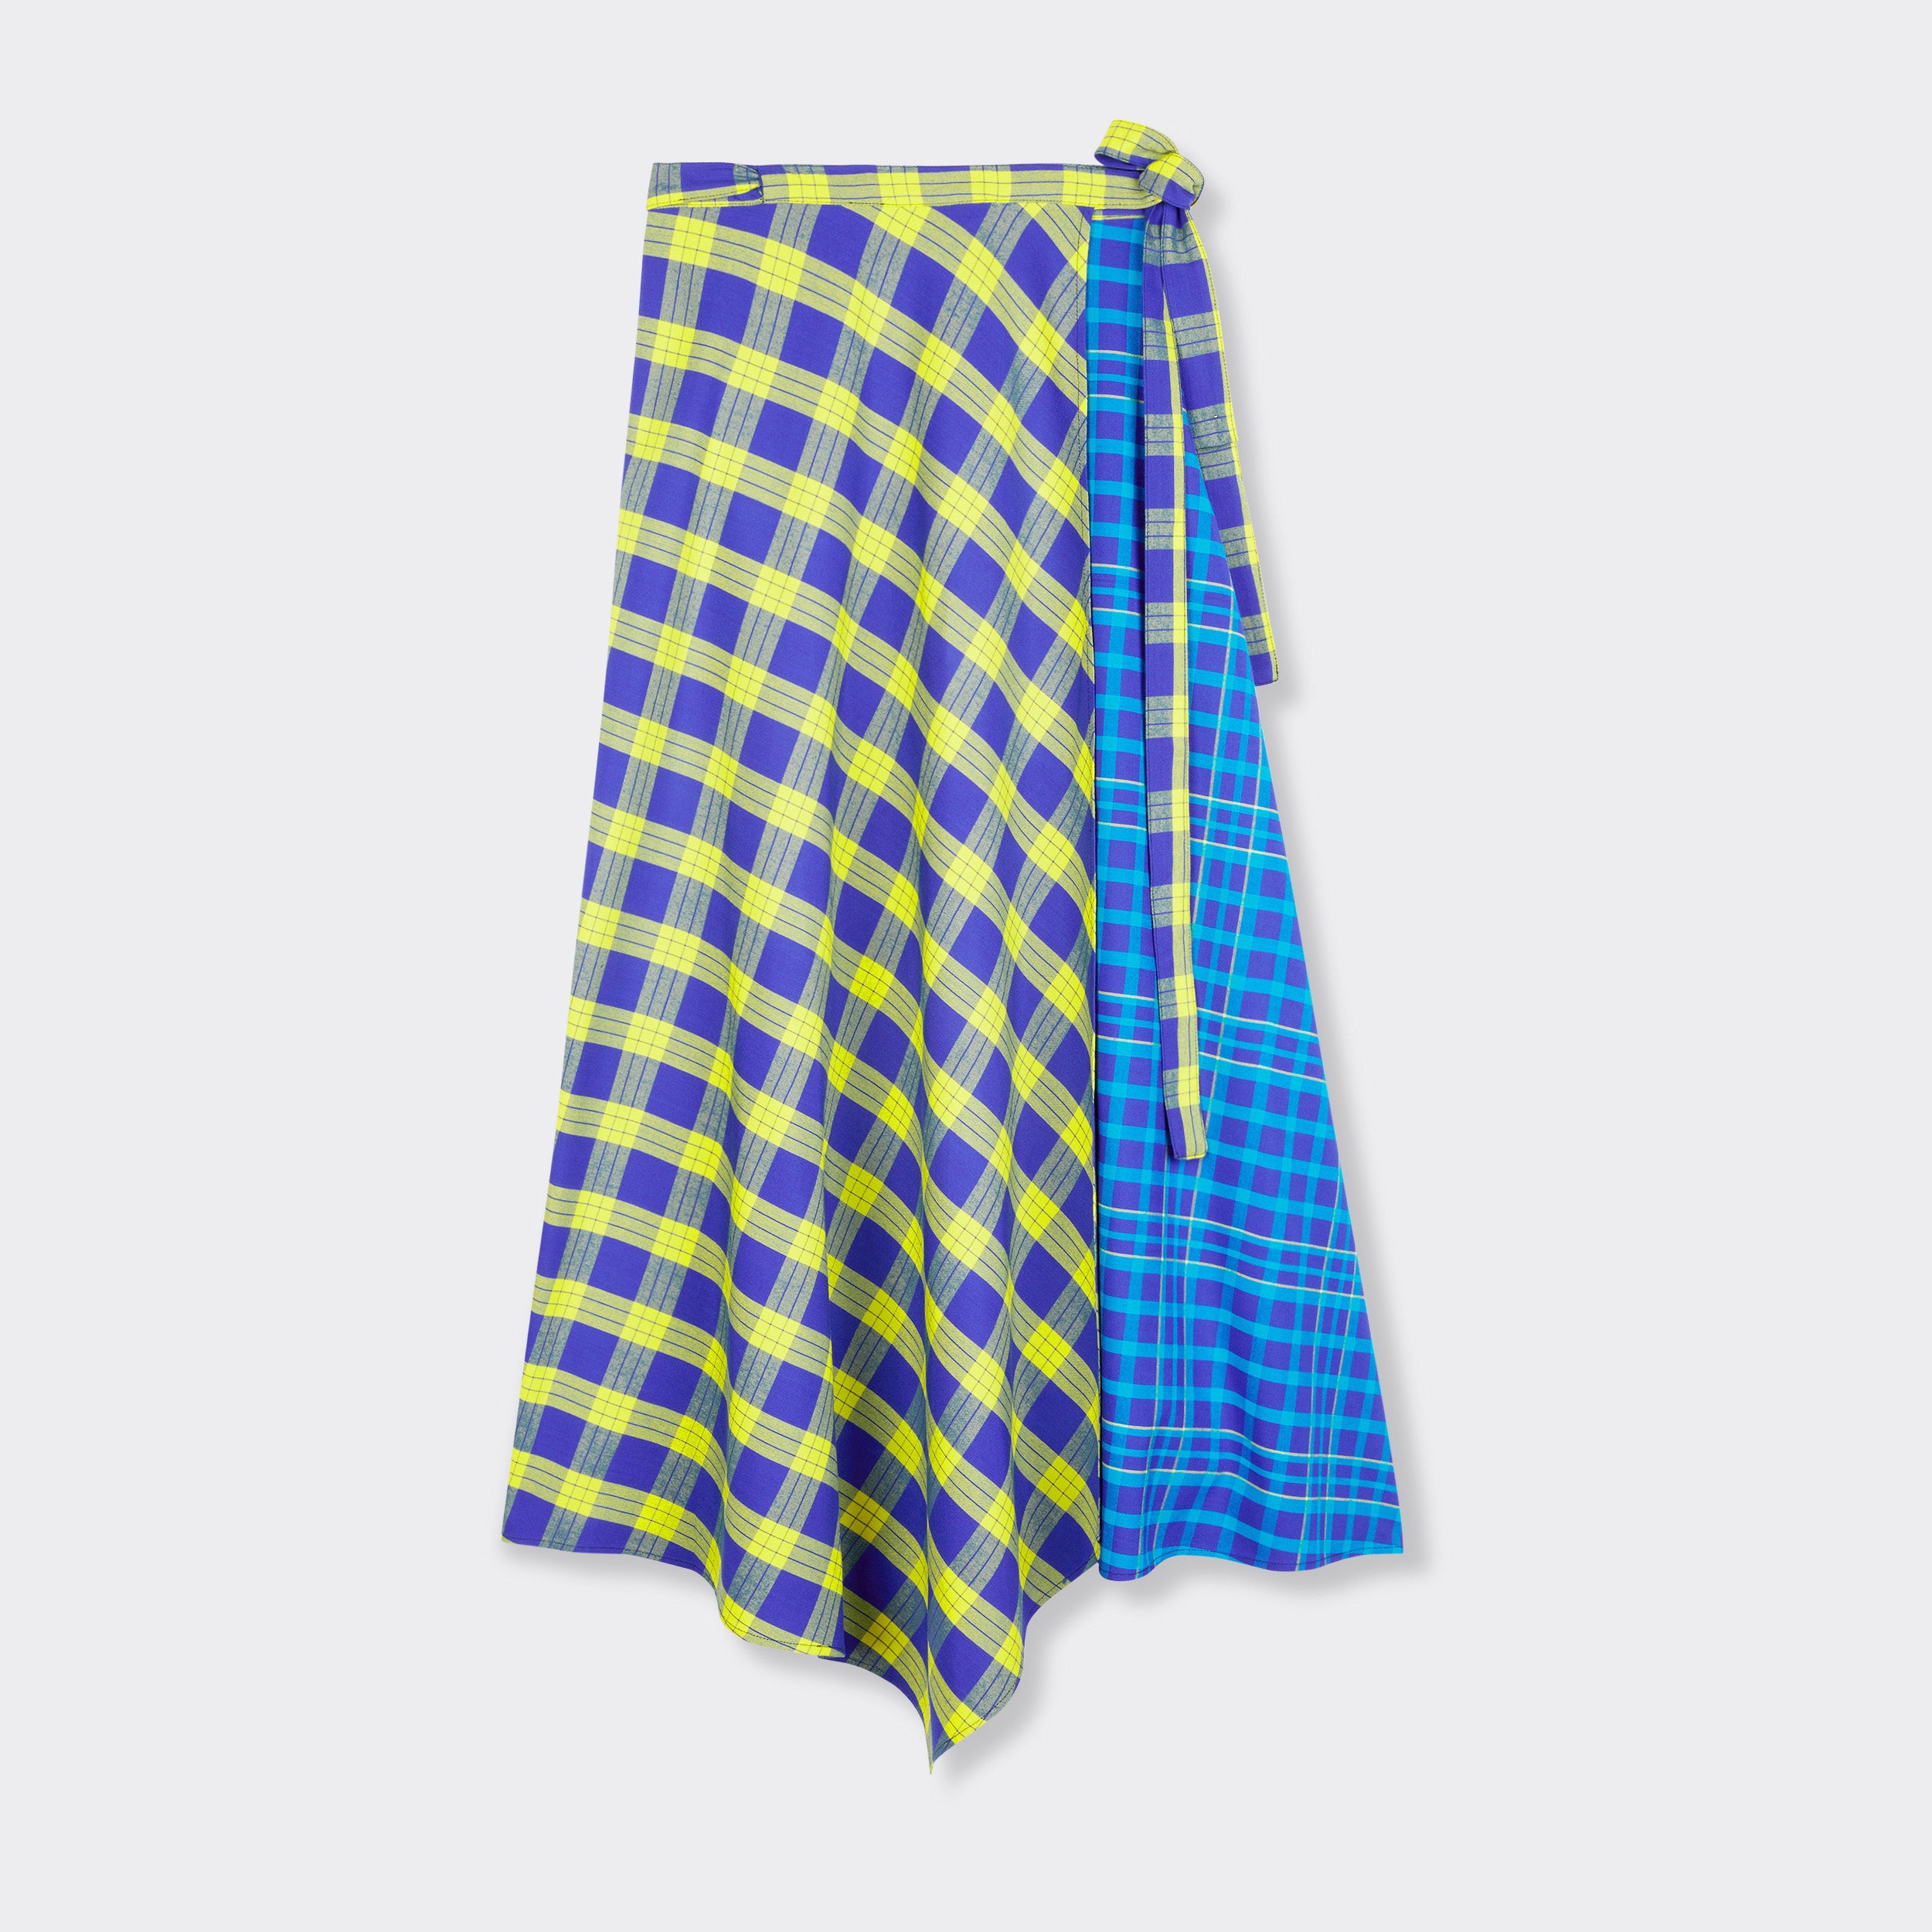 Still life:  Maasai Check wrap skirt in blue and yellow